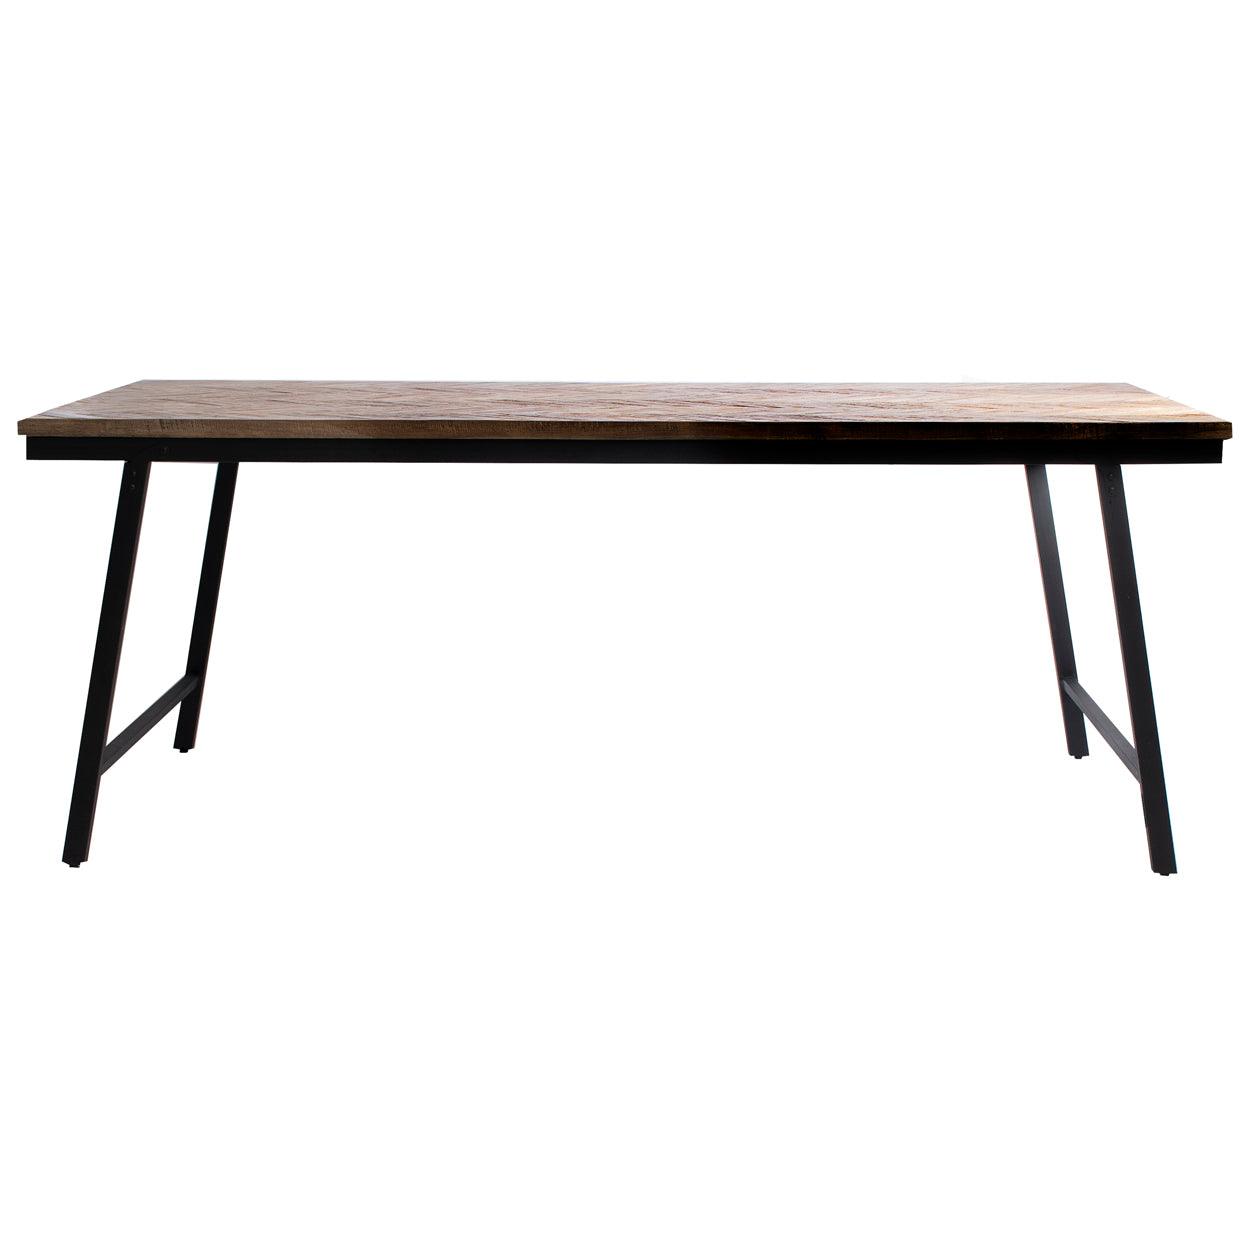 Herringbone Foldable Table - Natural 200cm - Flo & Joe